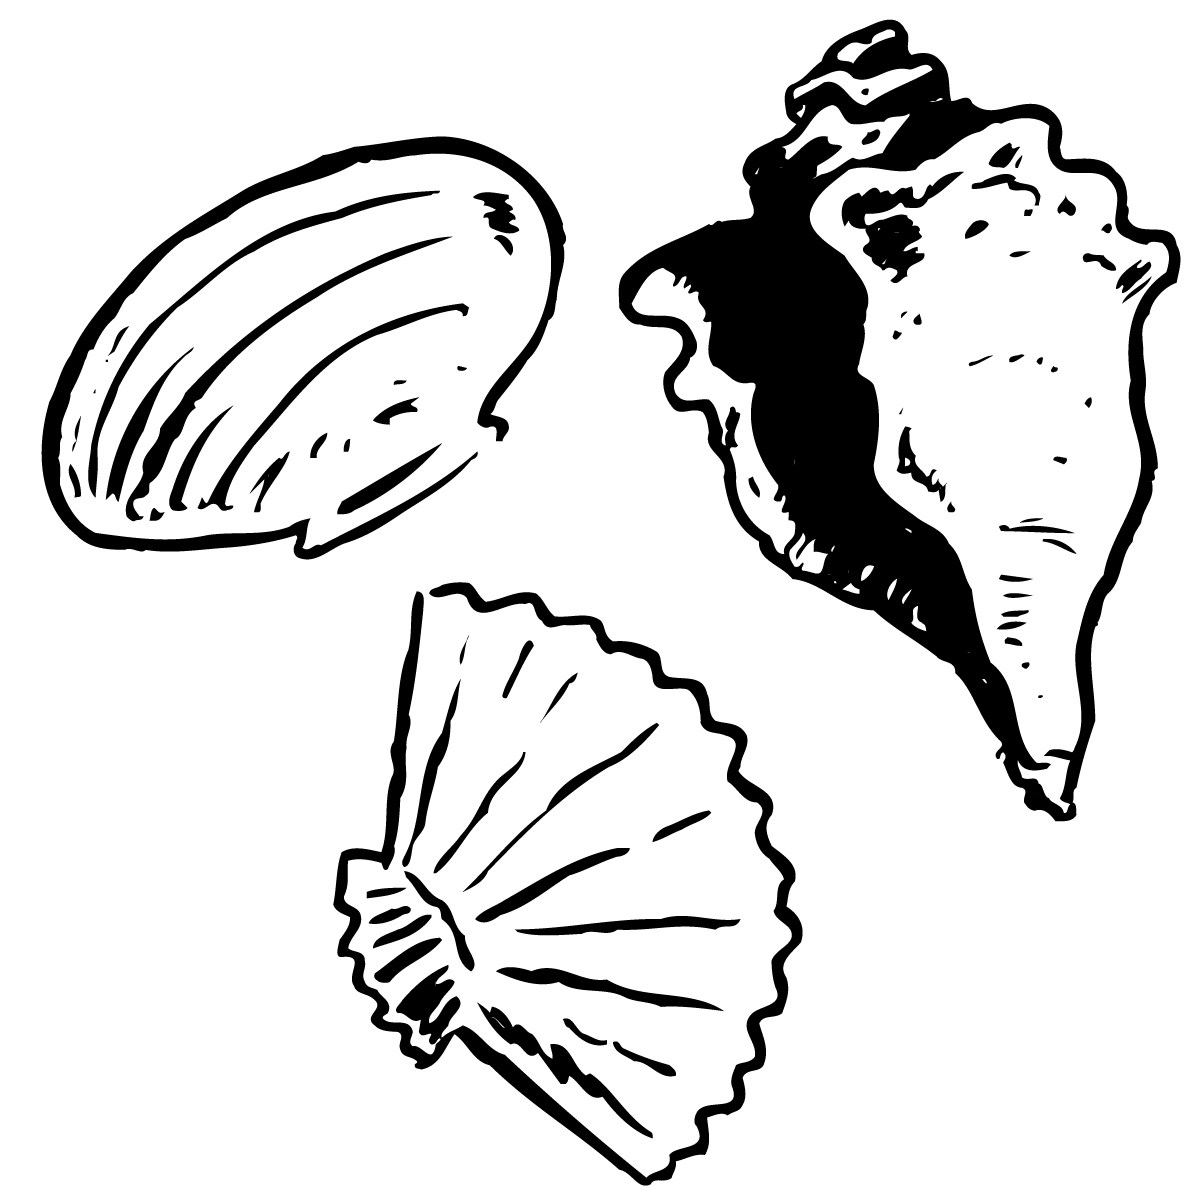 Sea shell clipart black and white 2 » Clipart Portal.